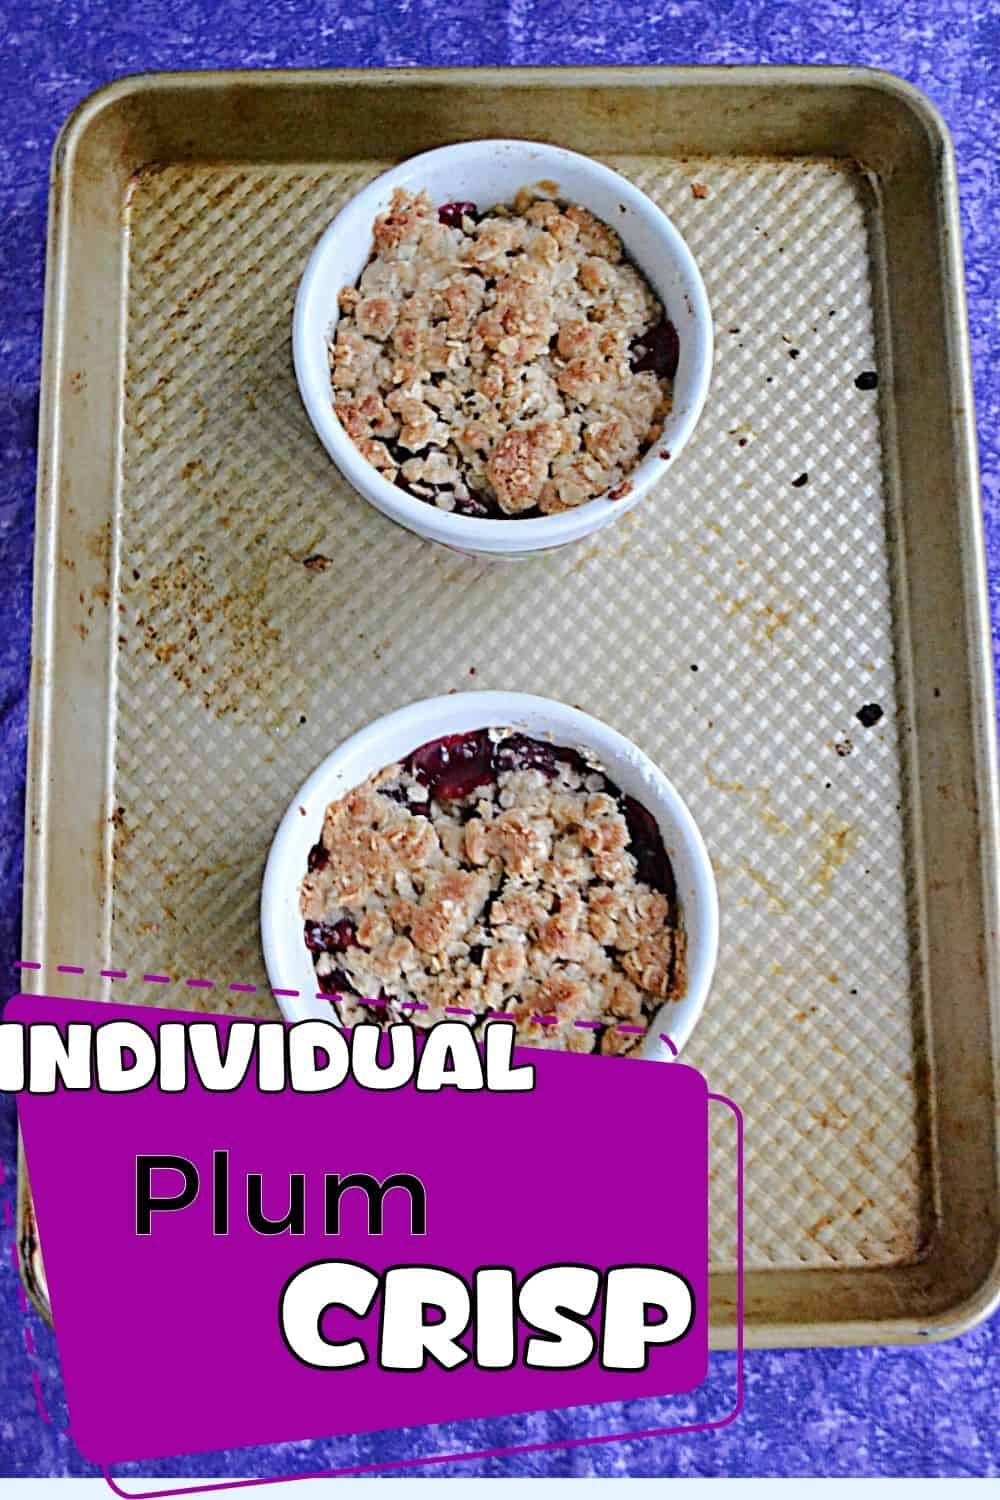 Pin Image:   Two ramekins of plum crisp, text title.